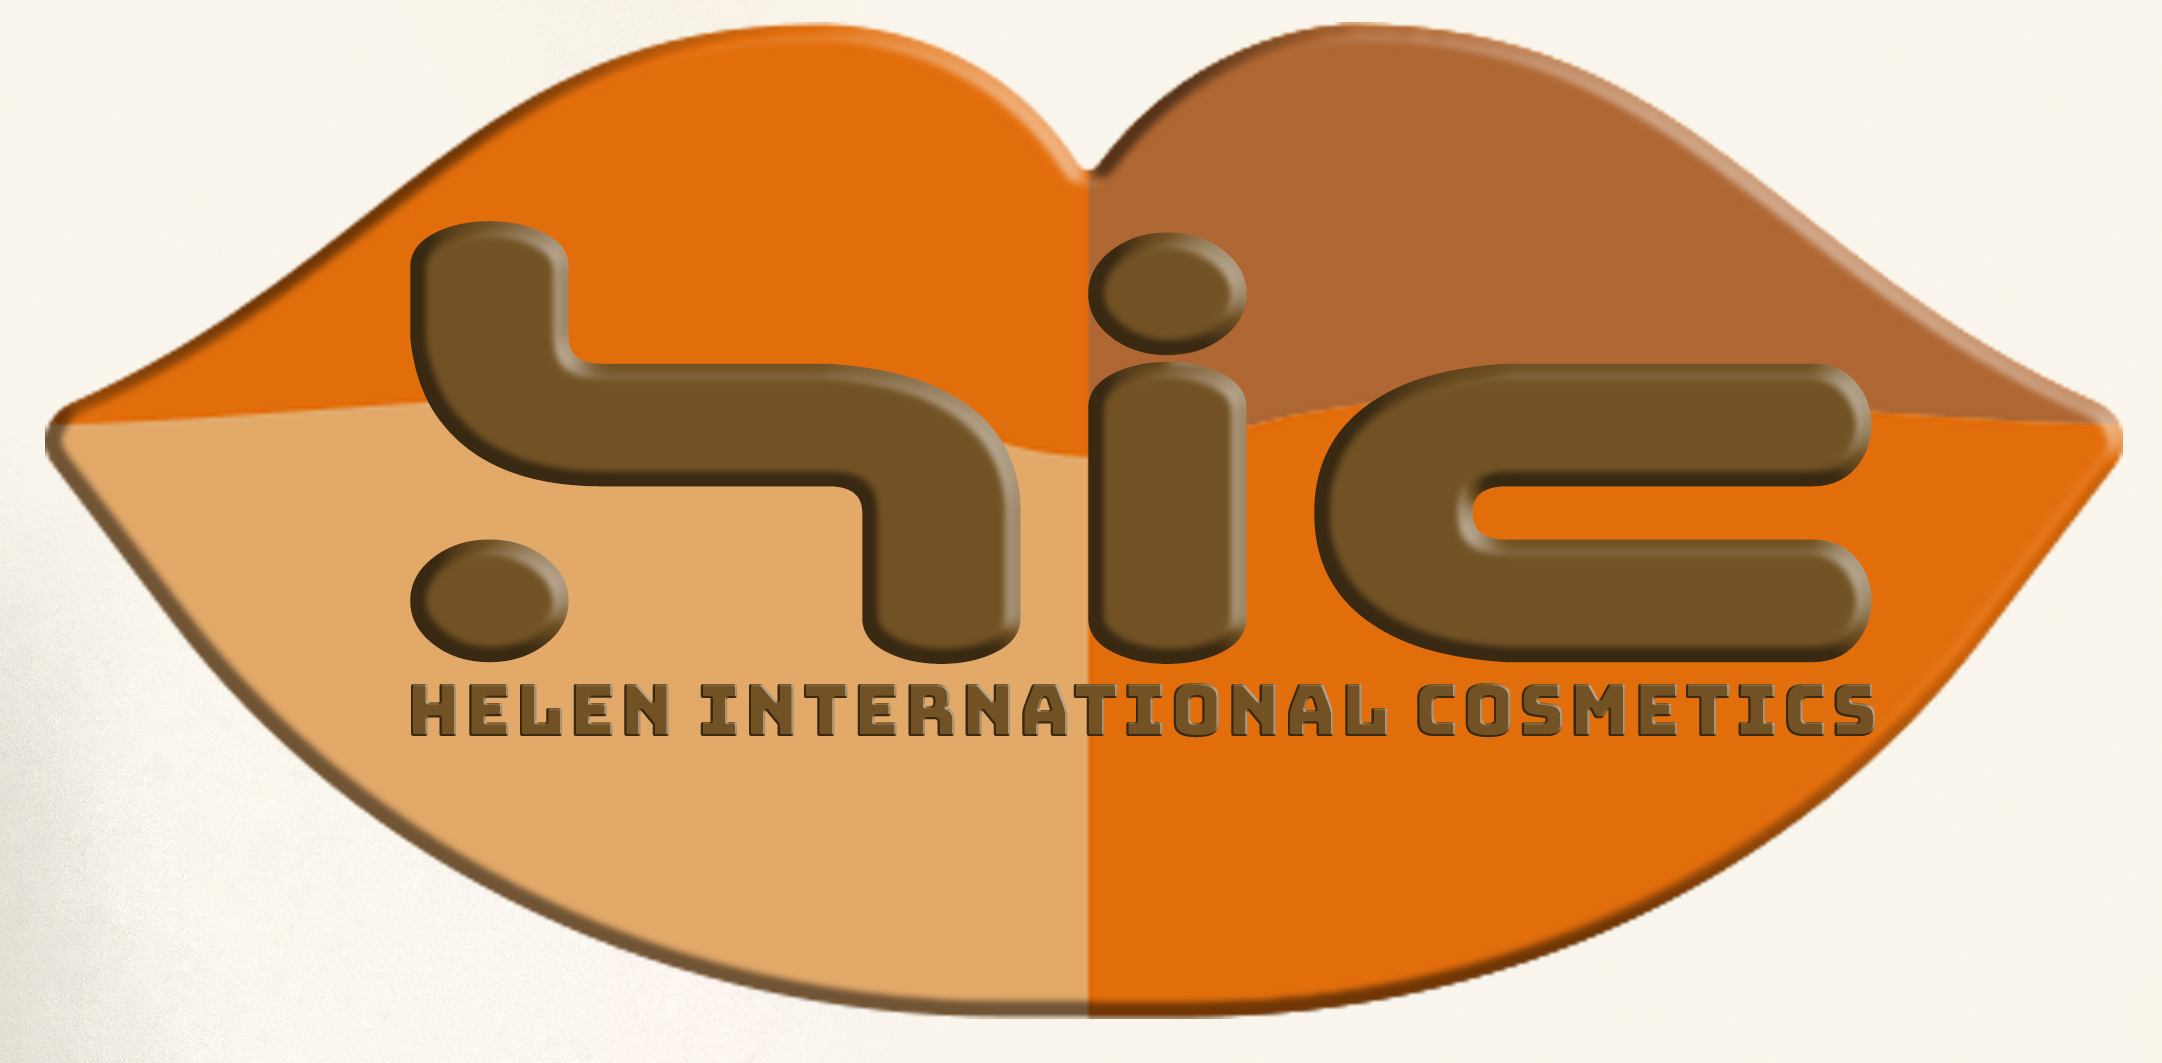 Welcome to Helen international cosmetics - HIC